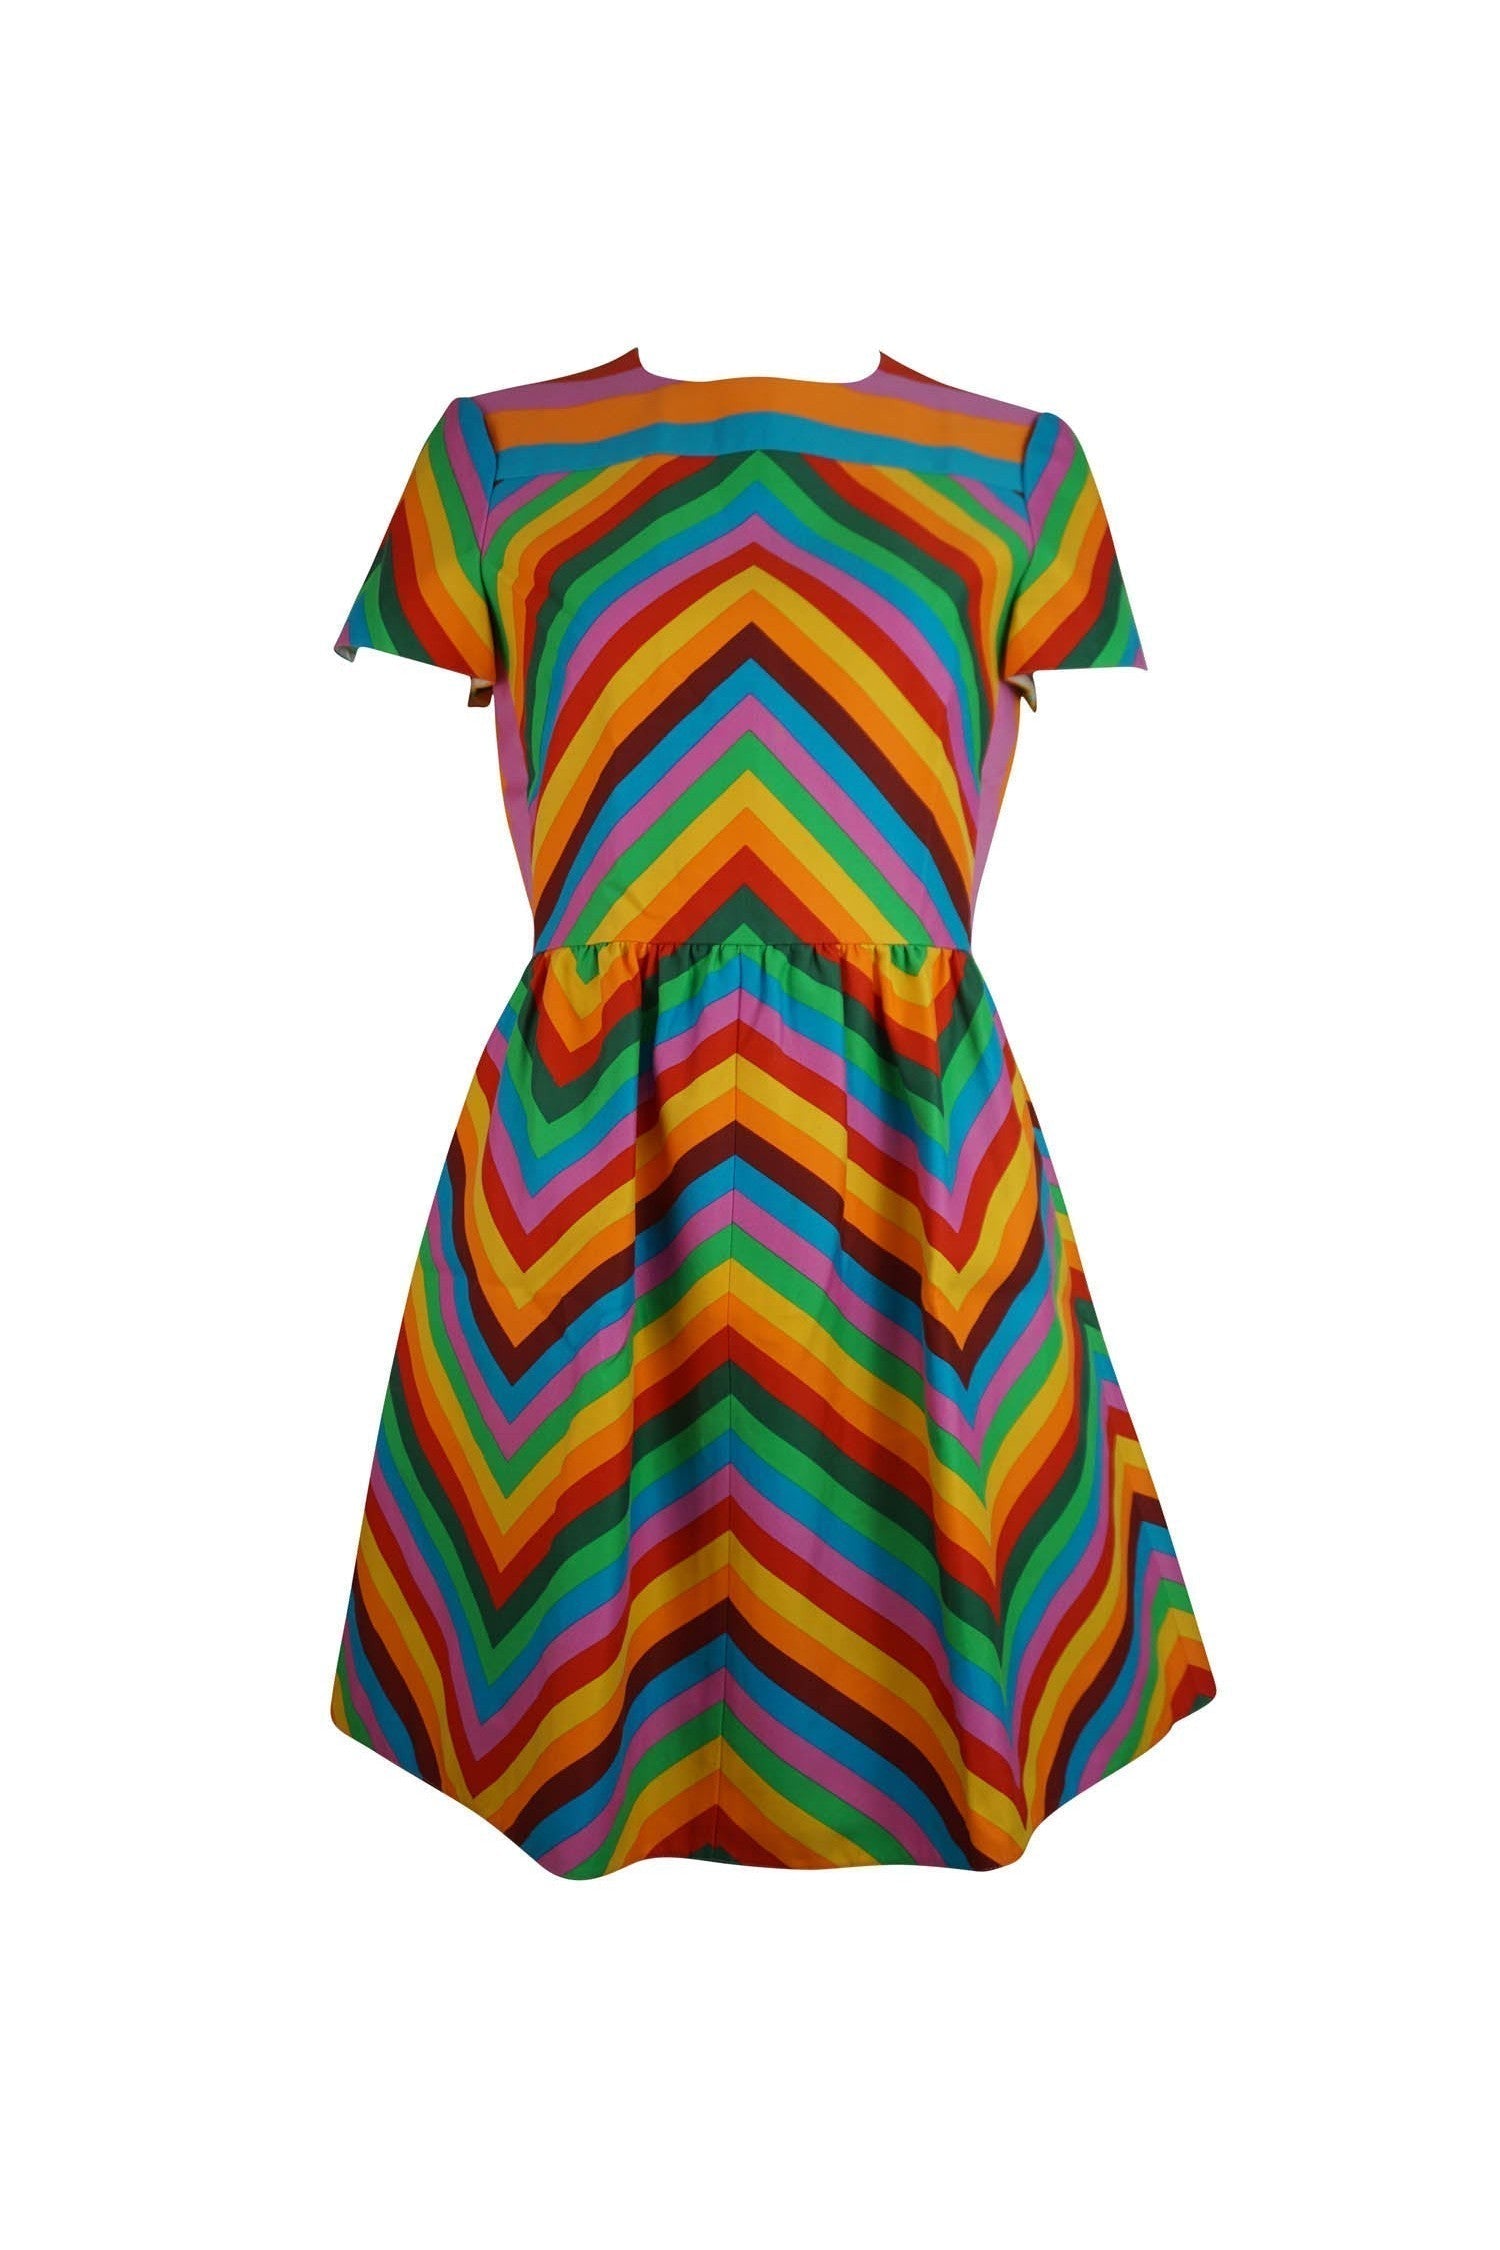 Valentino 1973 Archival Print Rainbow Dress 2015 - Foxy Couture Carmel